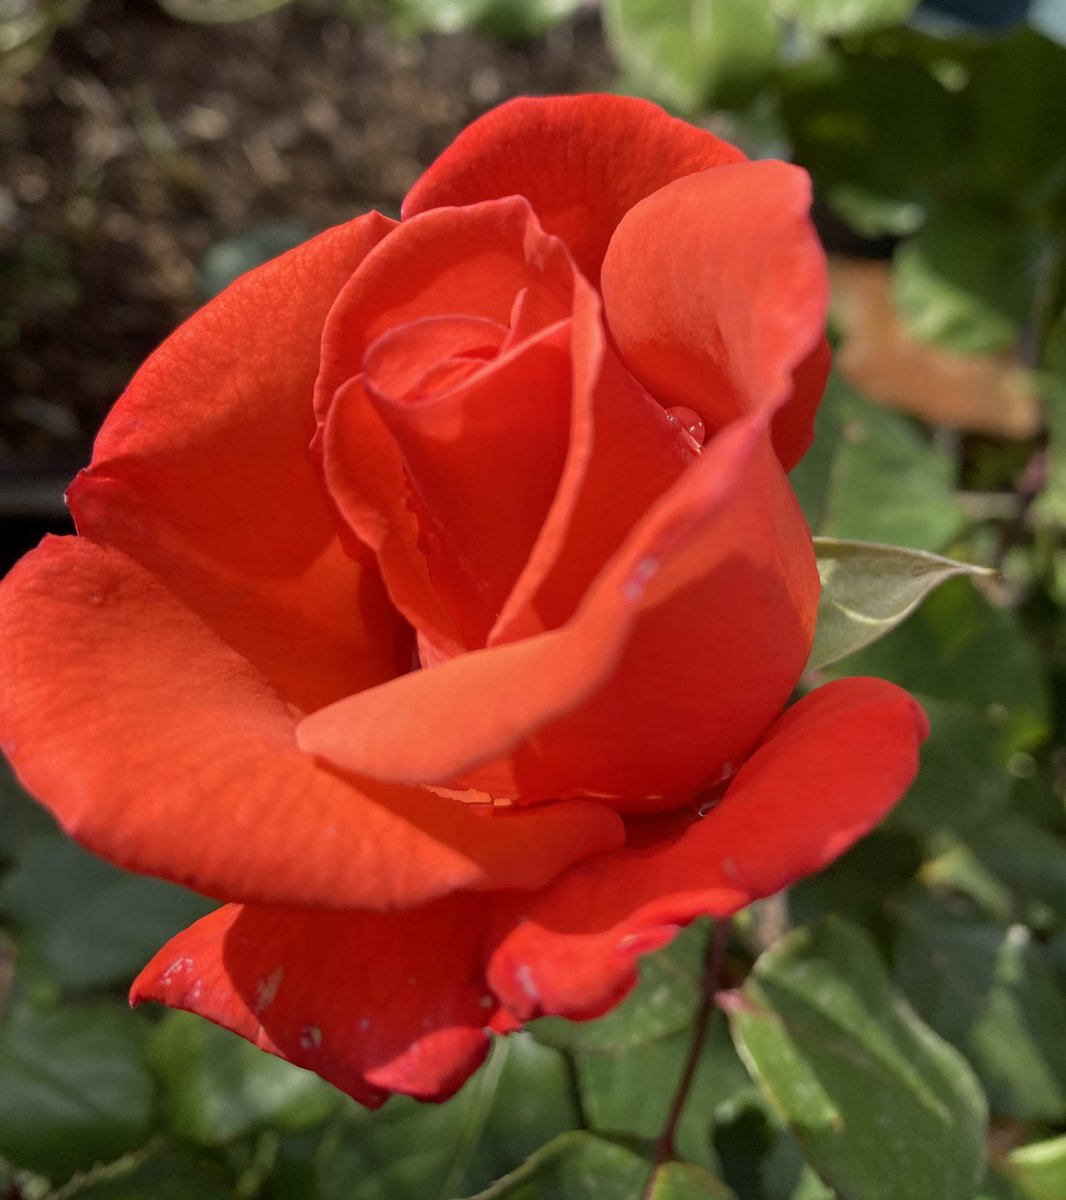 ‘Joro’ rose demanding attention at the allotment 🧡
#GardeningTwitter #GardeningX #RoseADay #Roses #Roses23